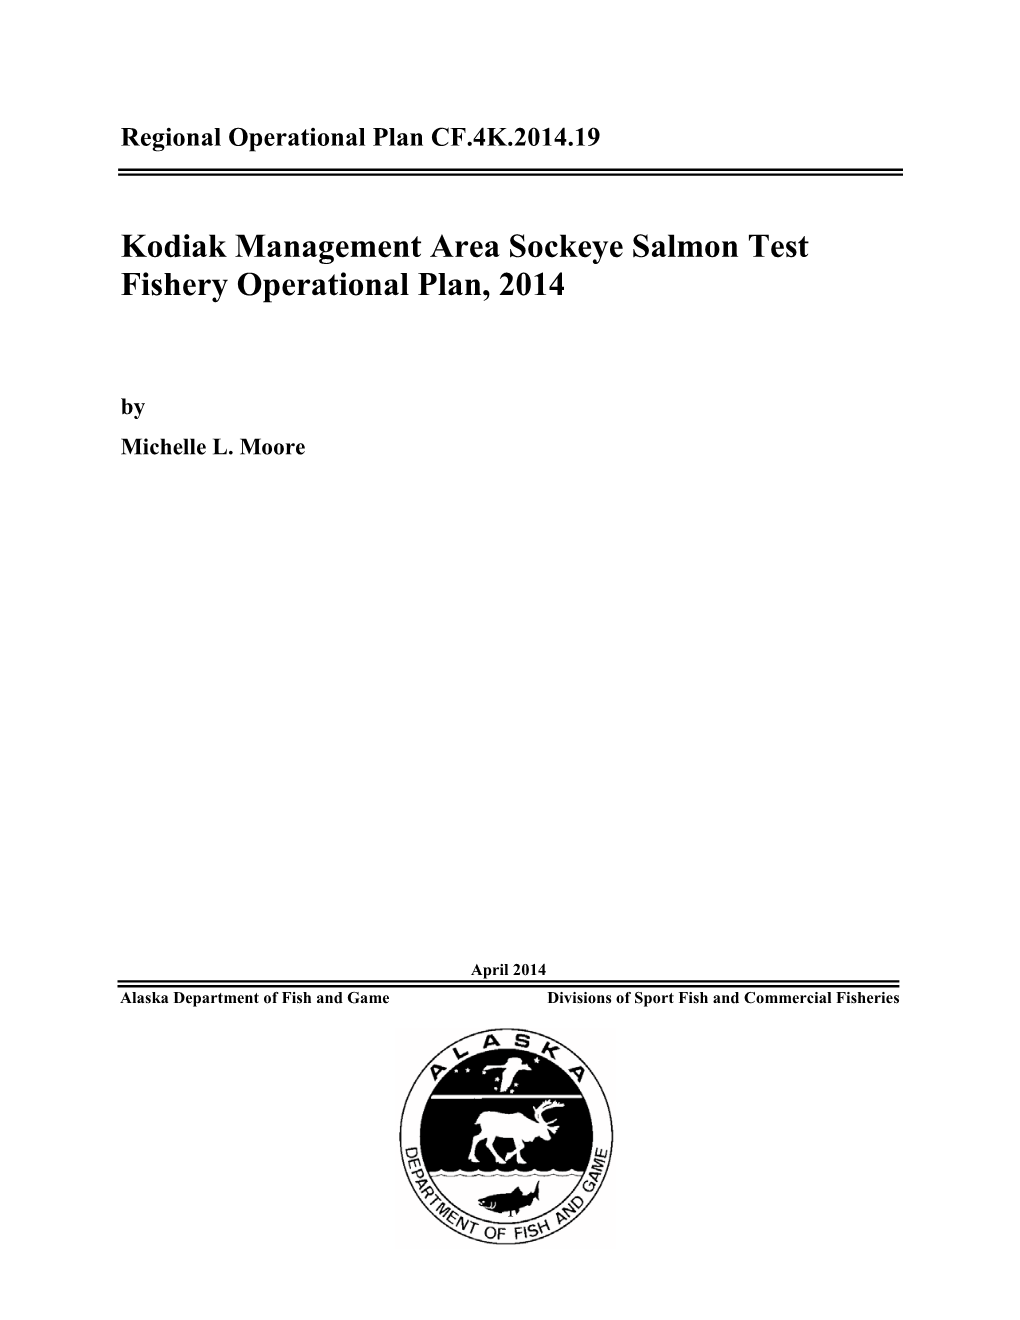 Kodiak Management Area Sockeye Salmon Test Fishery Operational Plan, 2014